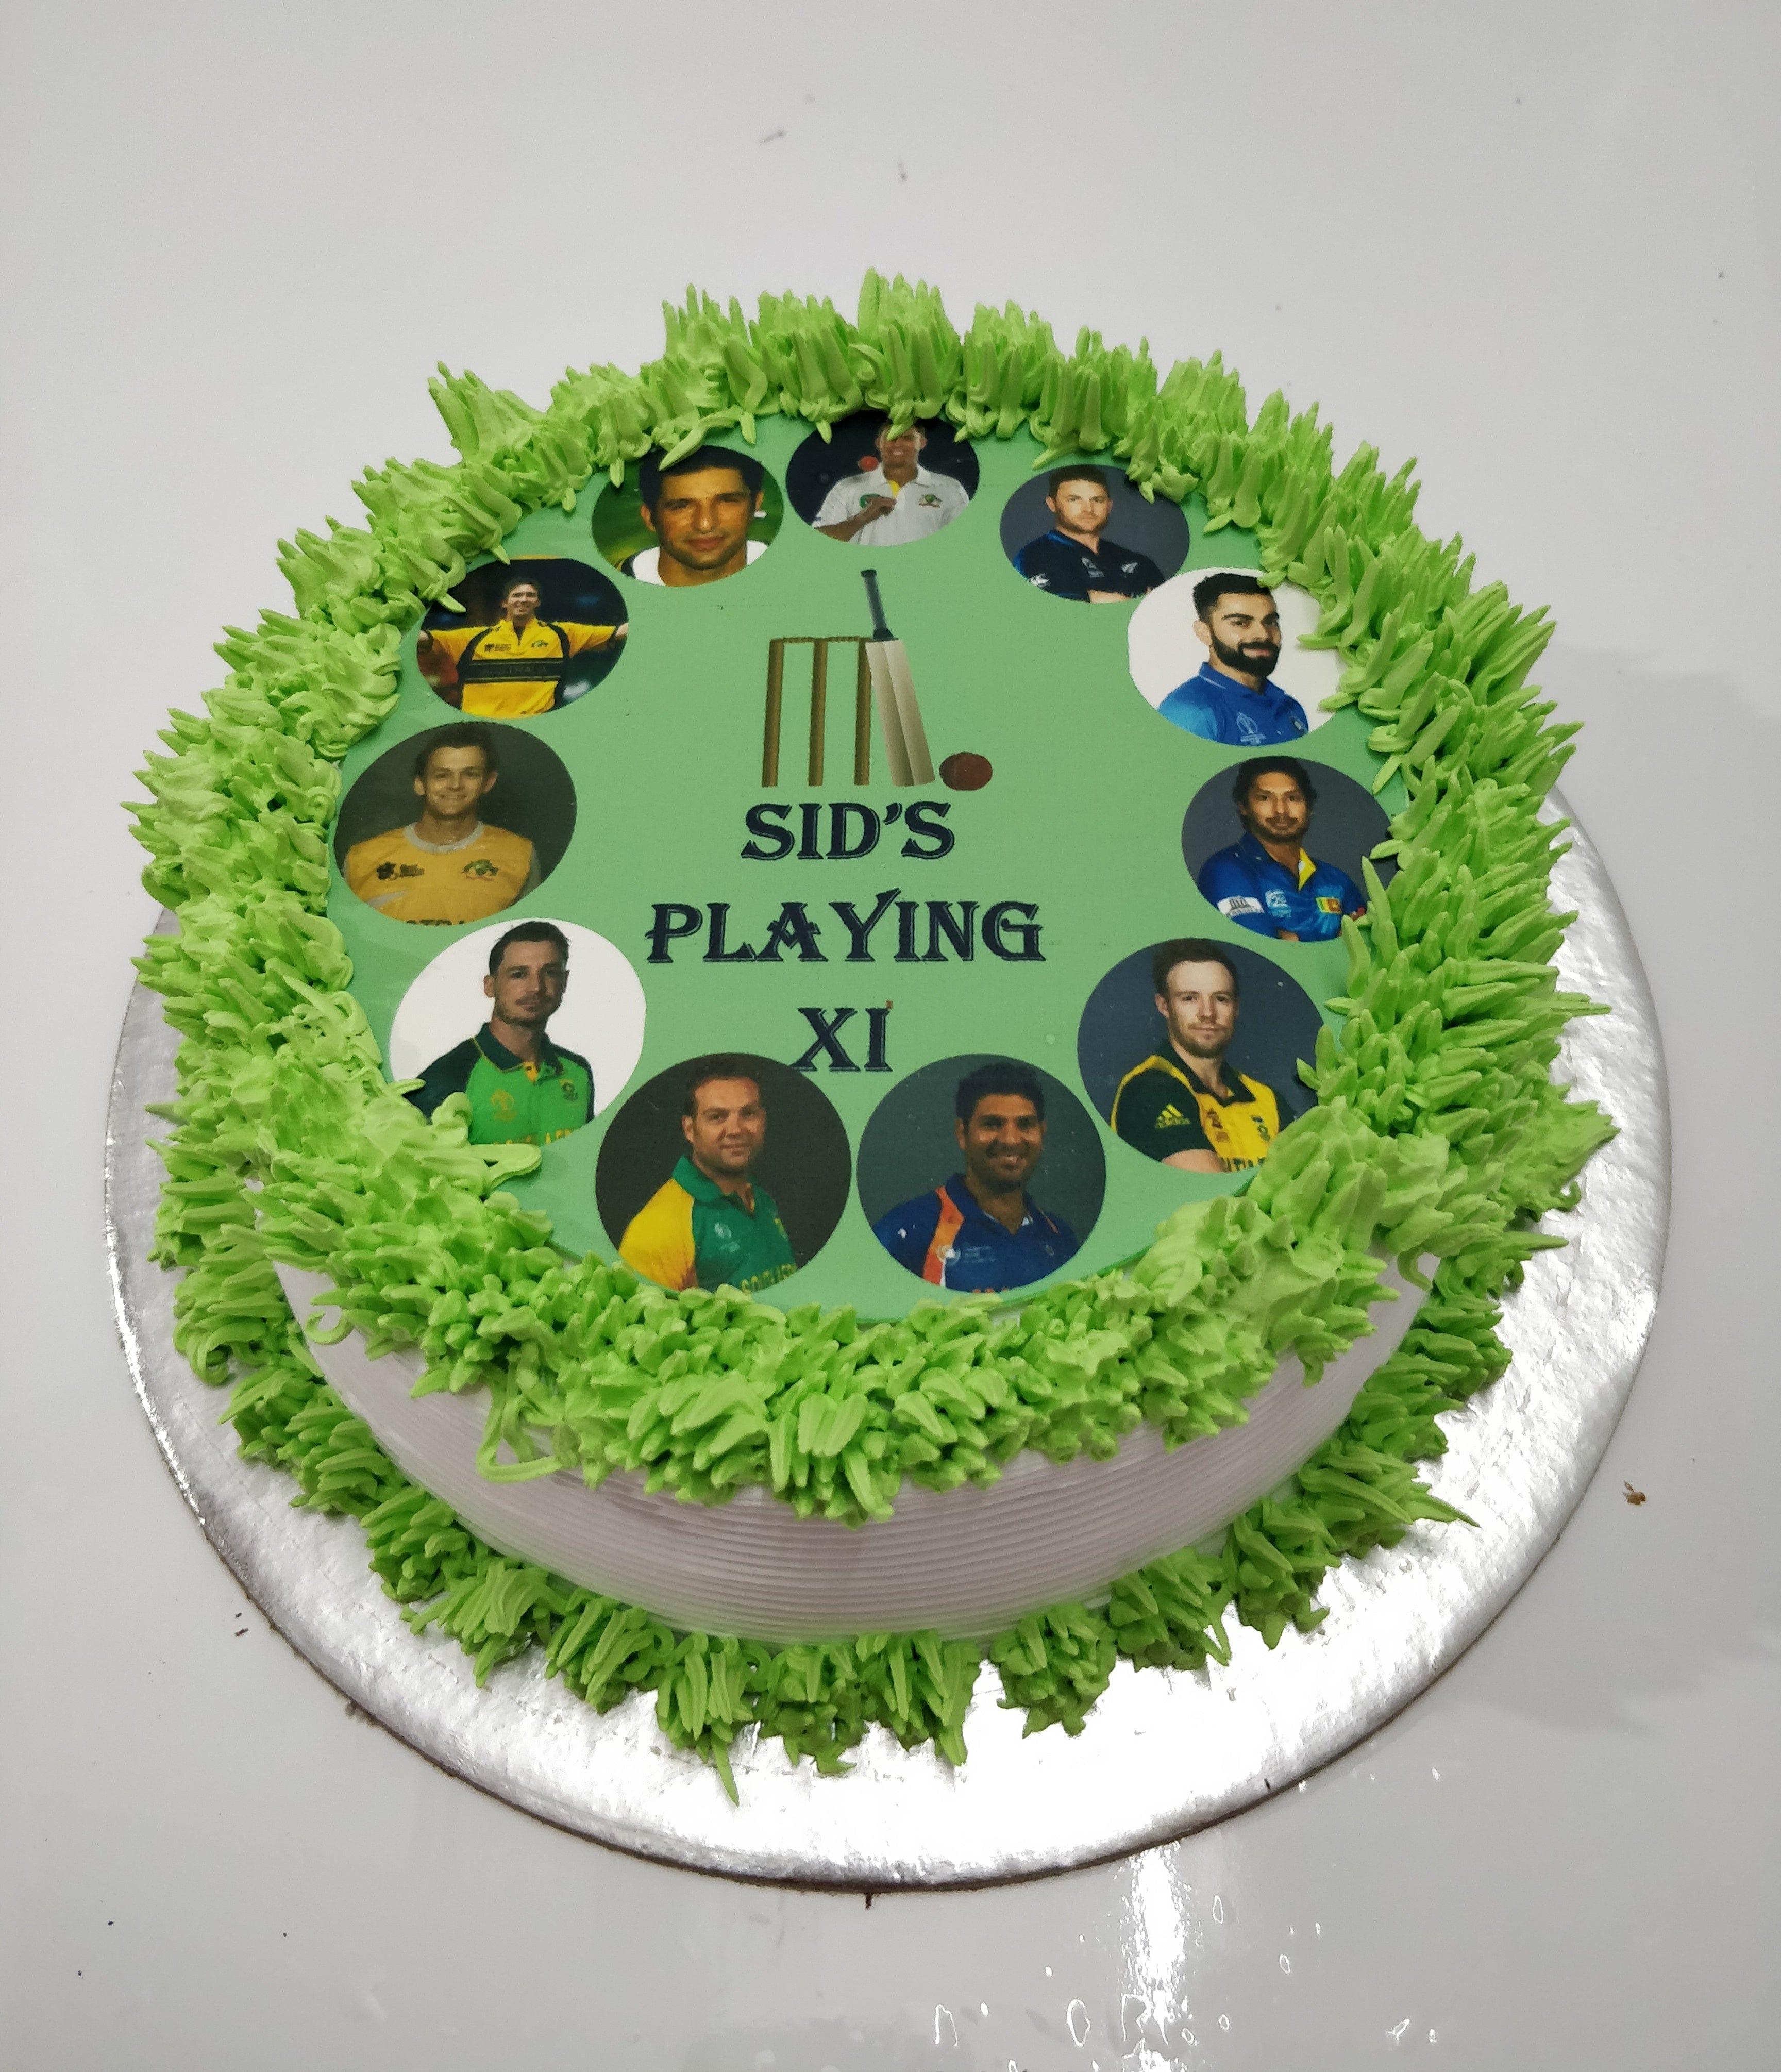 Score a six with TF Cakes' Cricket Theme Cakes! - TF Cakes - Medium